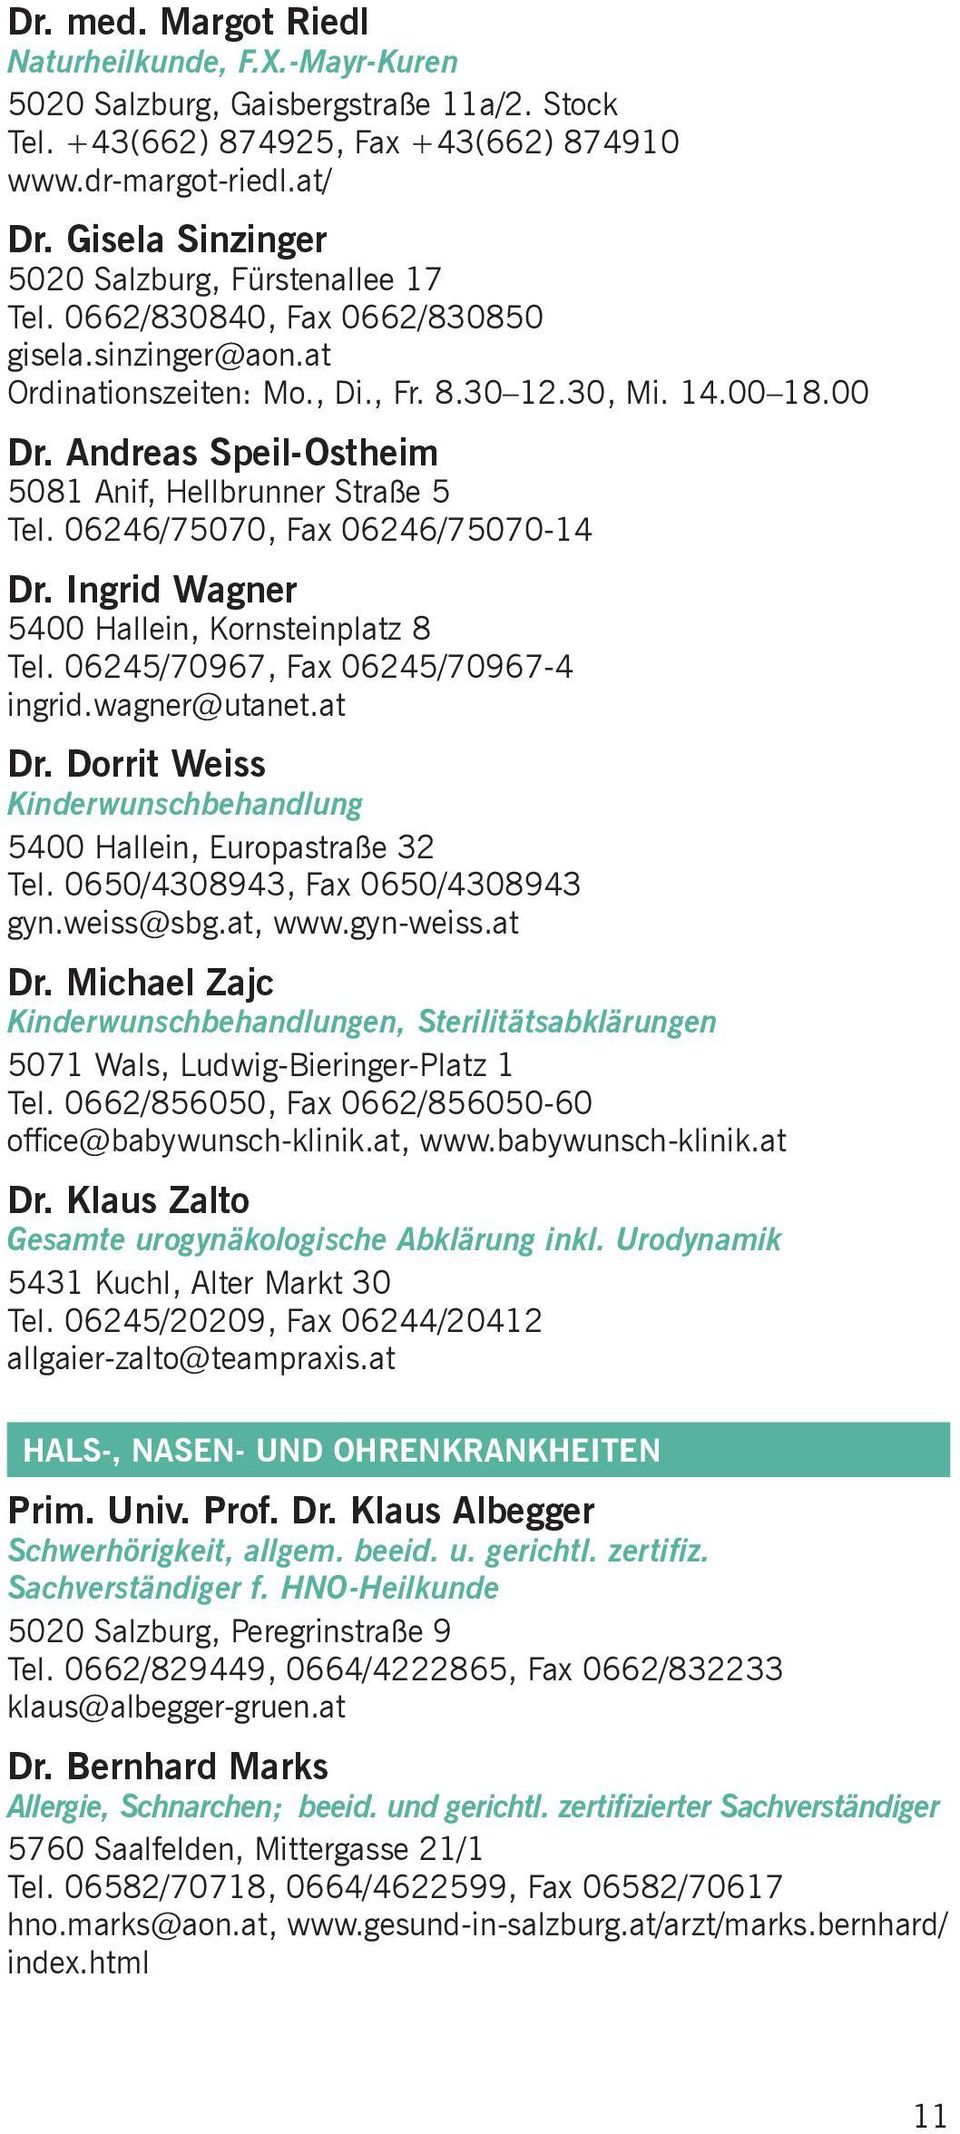 Andreas Speil-Ostheim 5081 Anif, Hellbrunner Straße 5 Tel. 06246/75070, Fax 06246/75070-14 Dr. Ingrid Wagner 5400 Hallein, Kornsteinplatz 8 Tel. 06245/70967, Fax 06245/70967-4 ingrid.wagner@utanet.